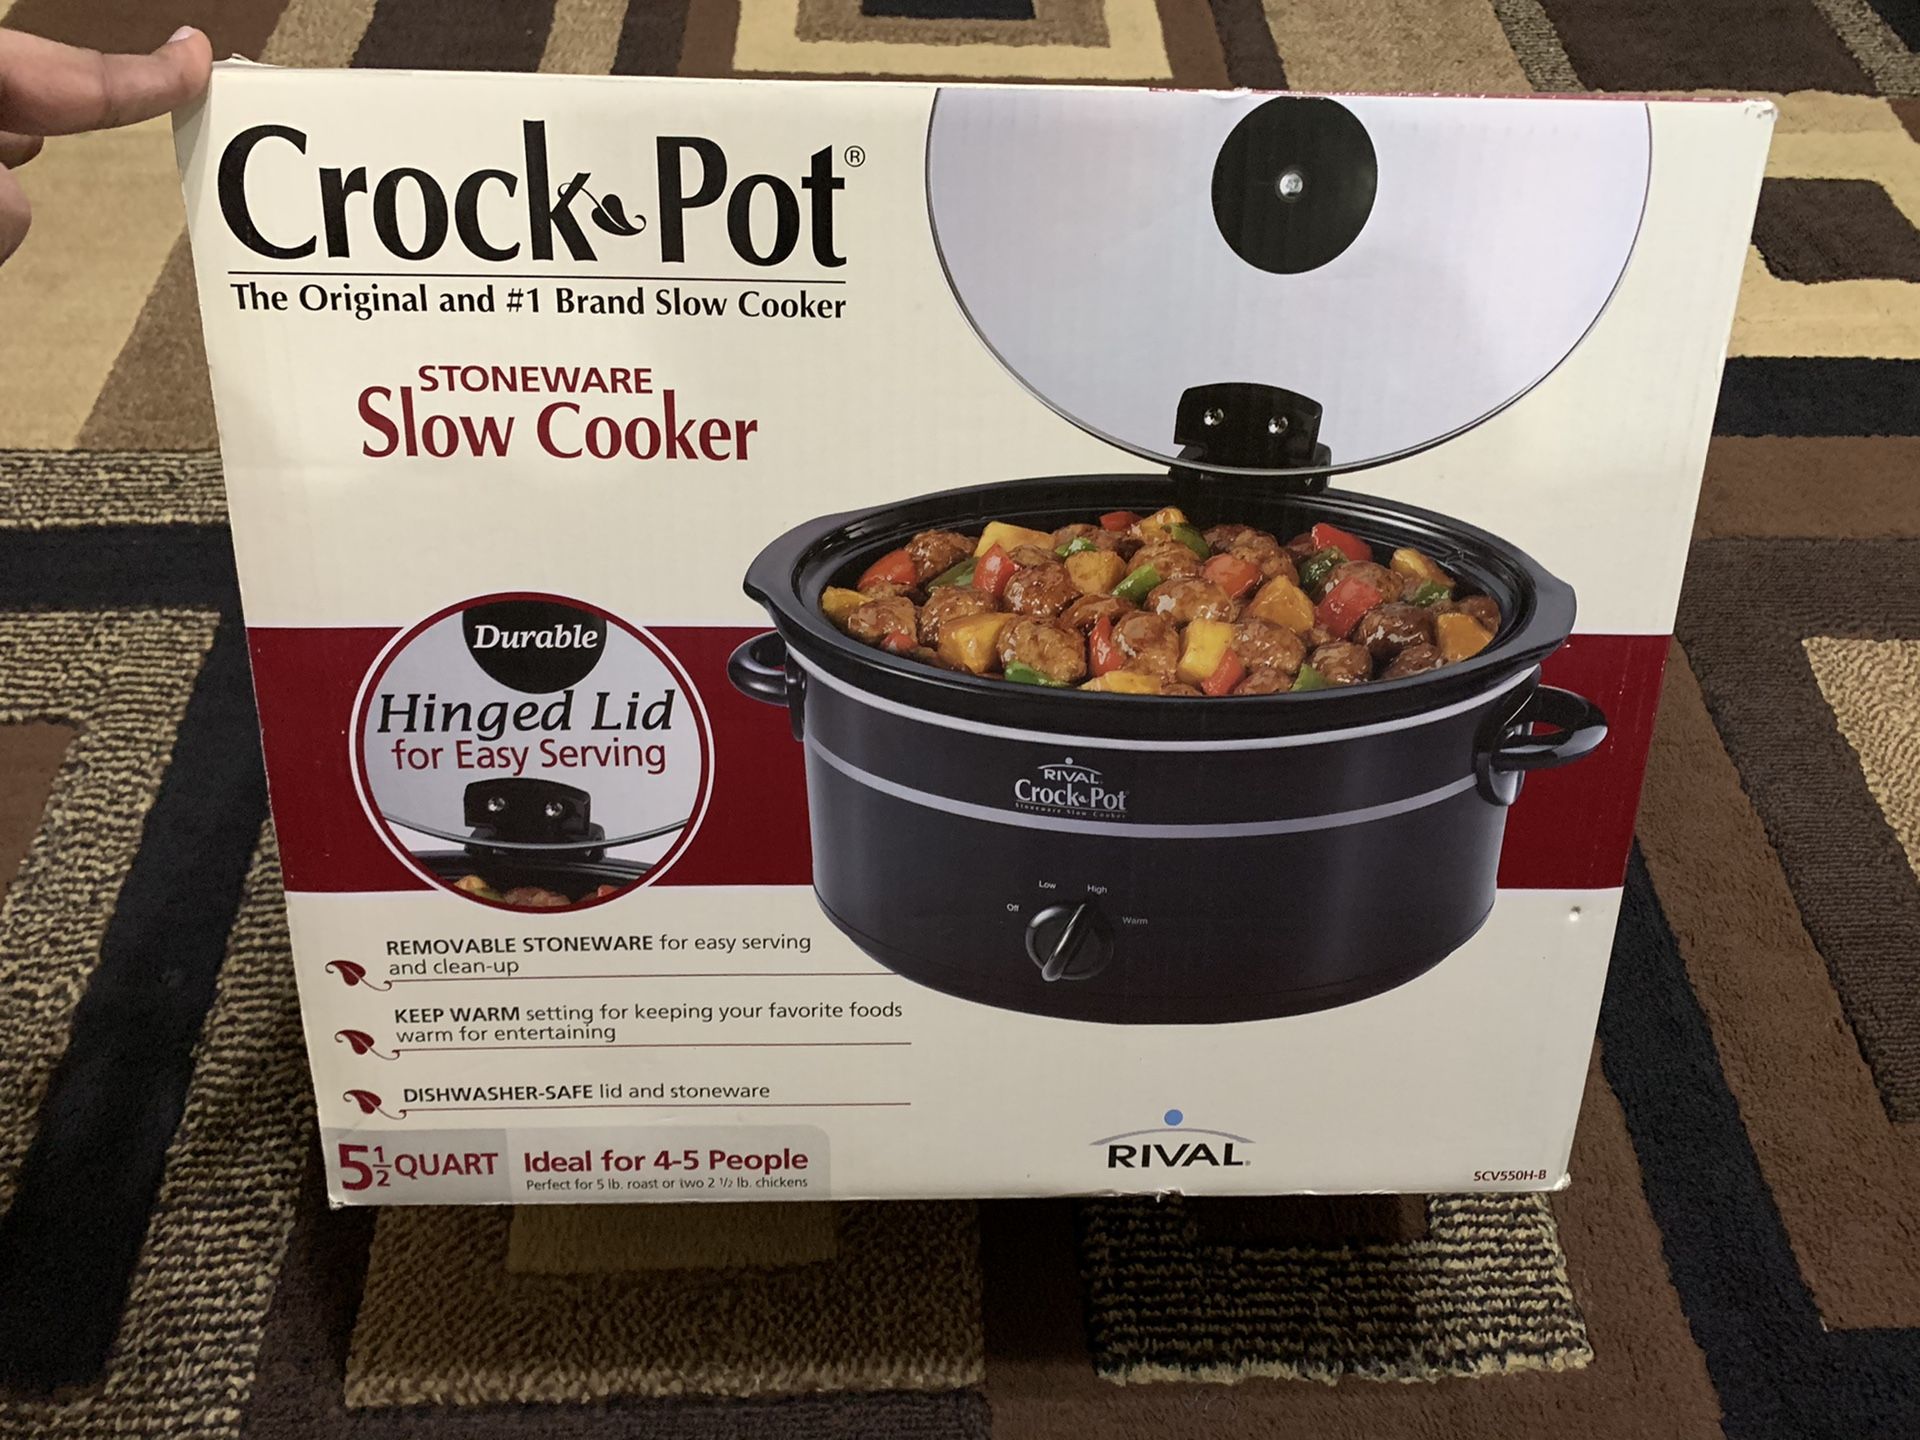 Brand new Crock Pot from RIval 5.5 Quart